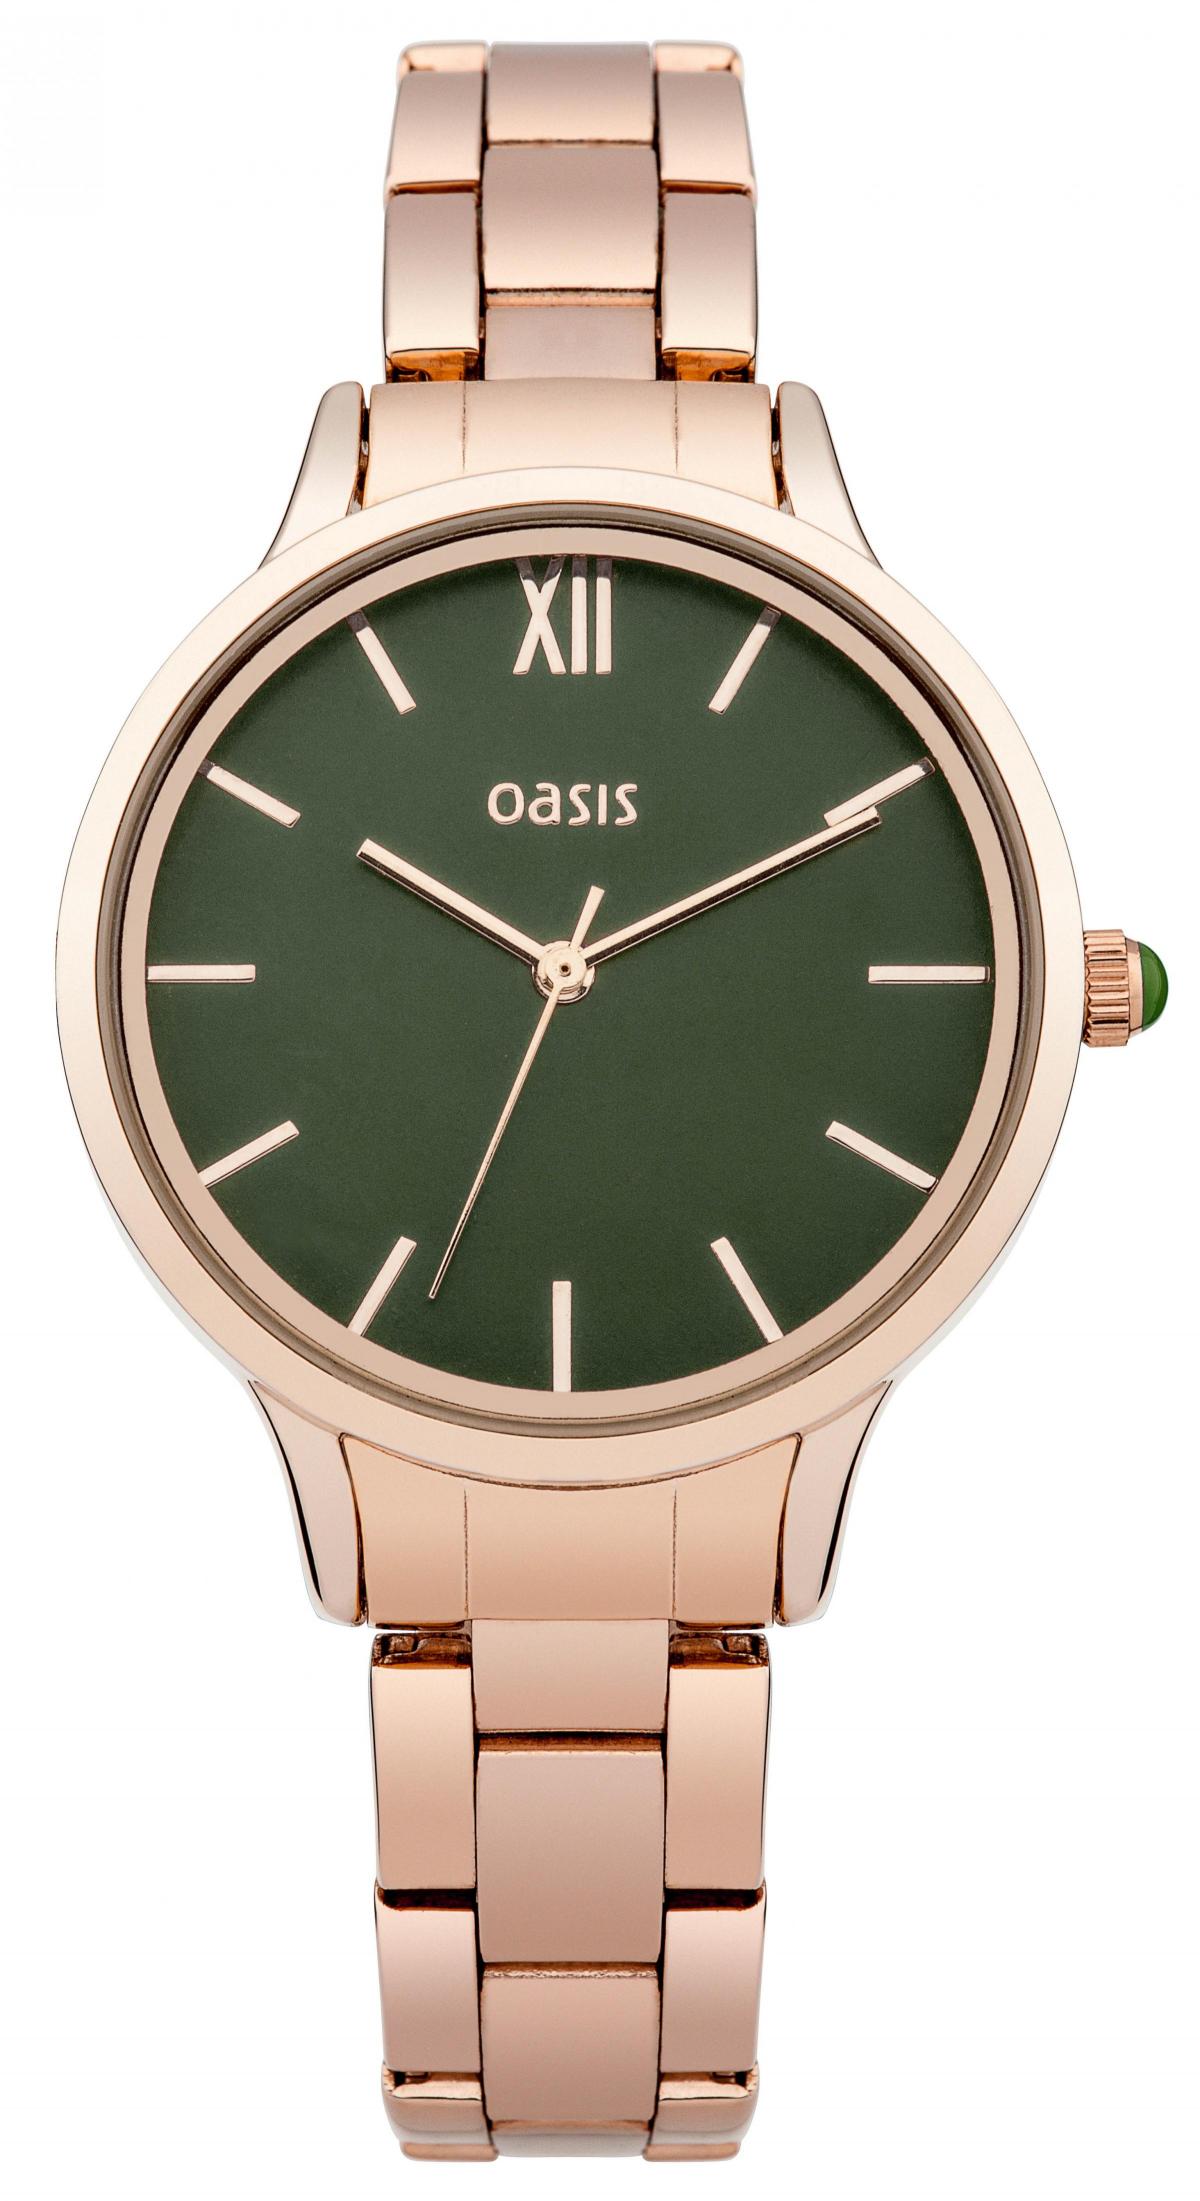 Oasis in John Lewis, rose gold bracelet watch, £40